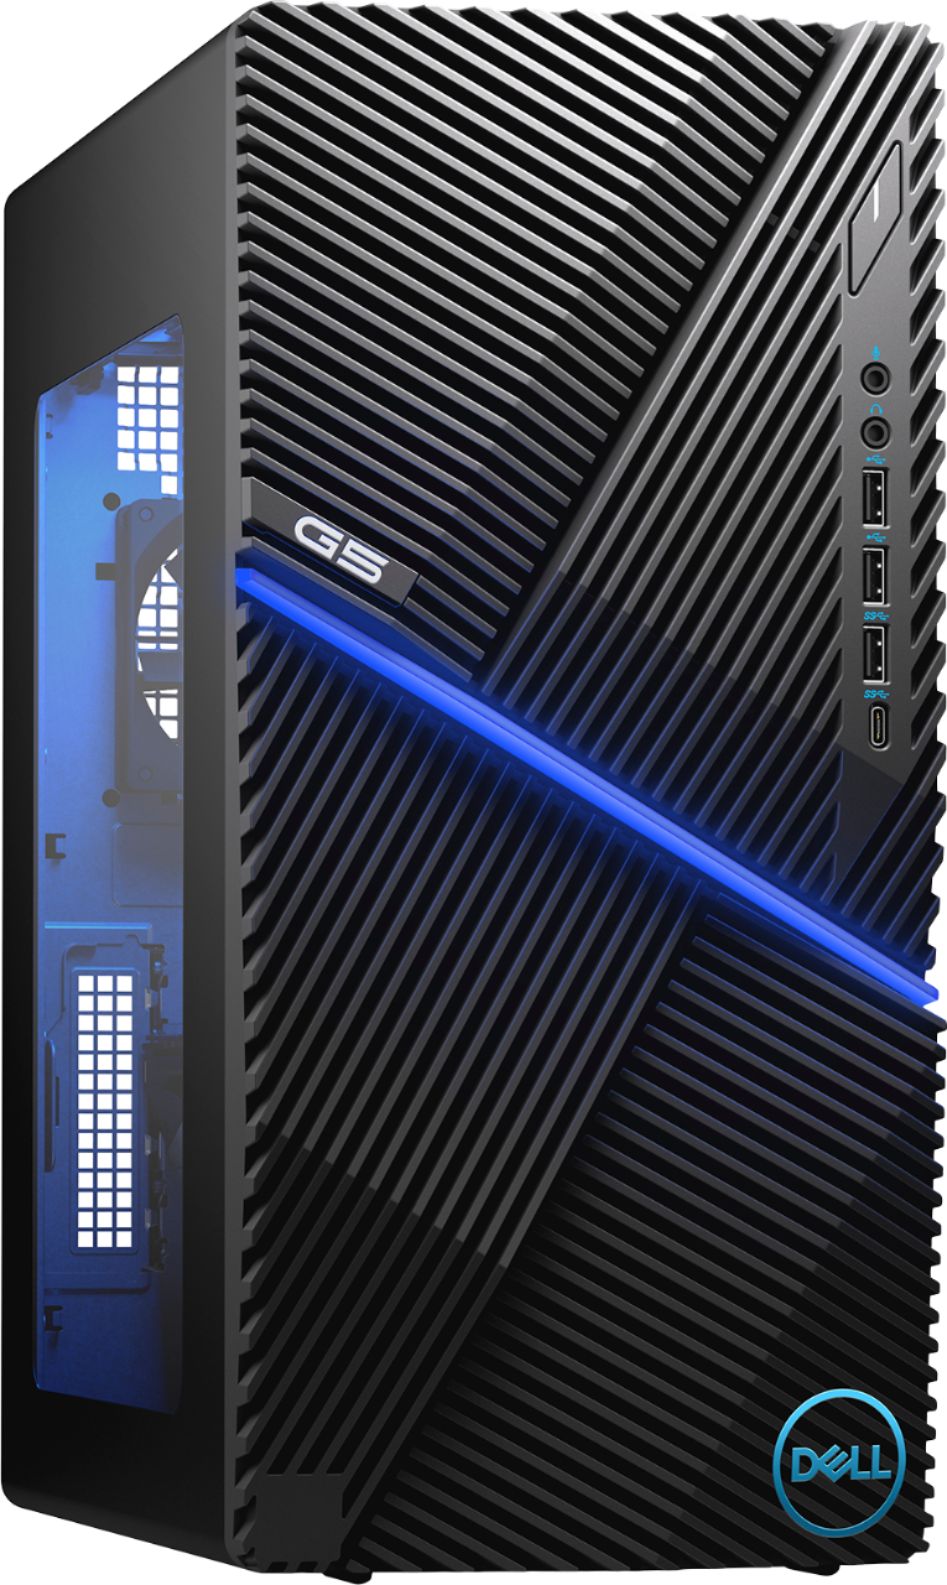 Dell G5 Gaming Desktop Intel Core i7-10700F 16GB  - Best Buy